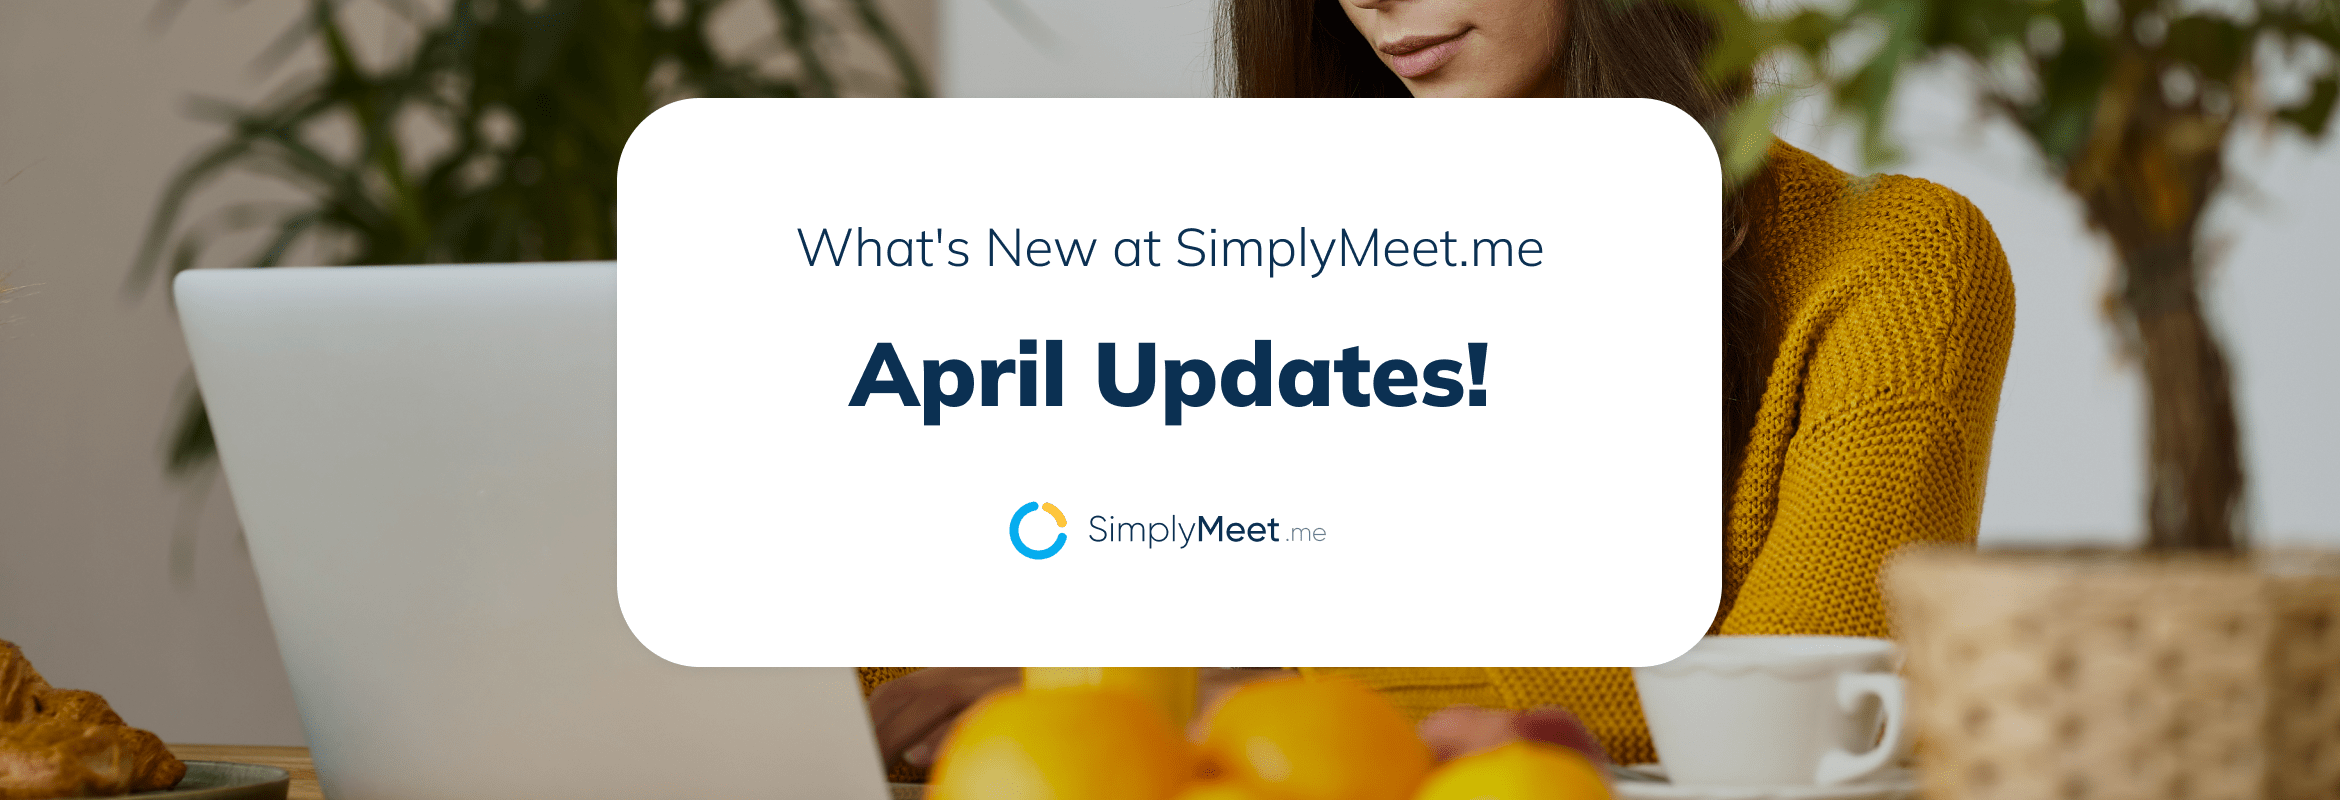 SimplyMeet.me Newsletter